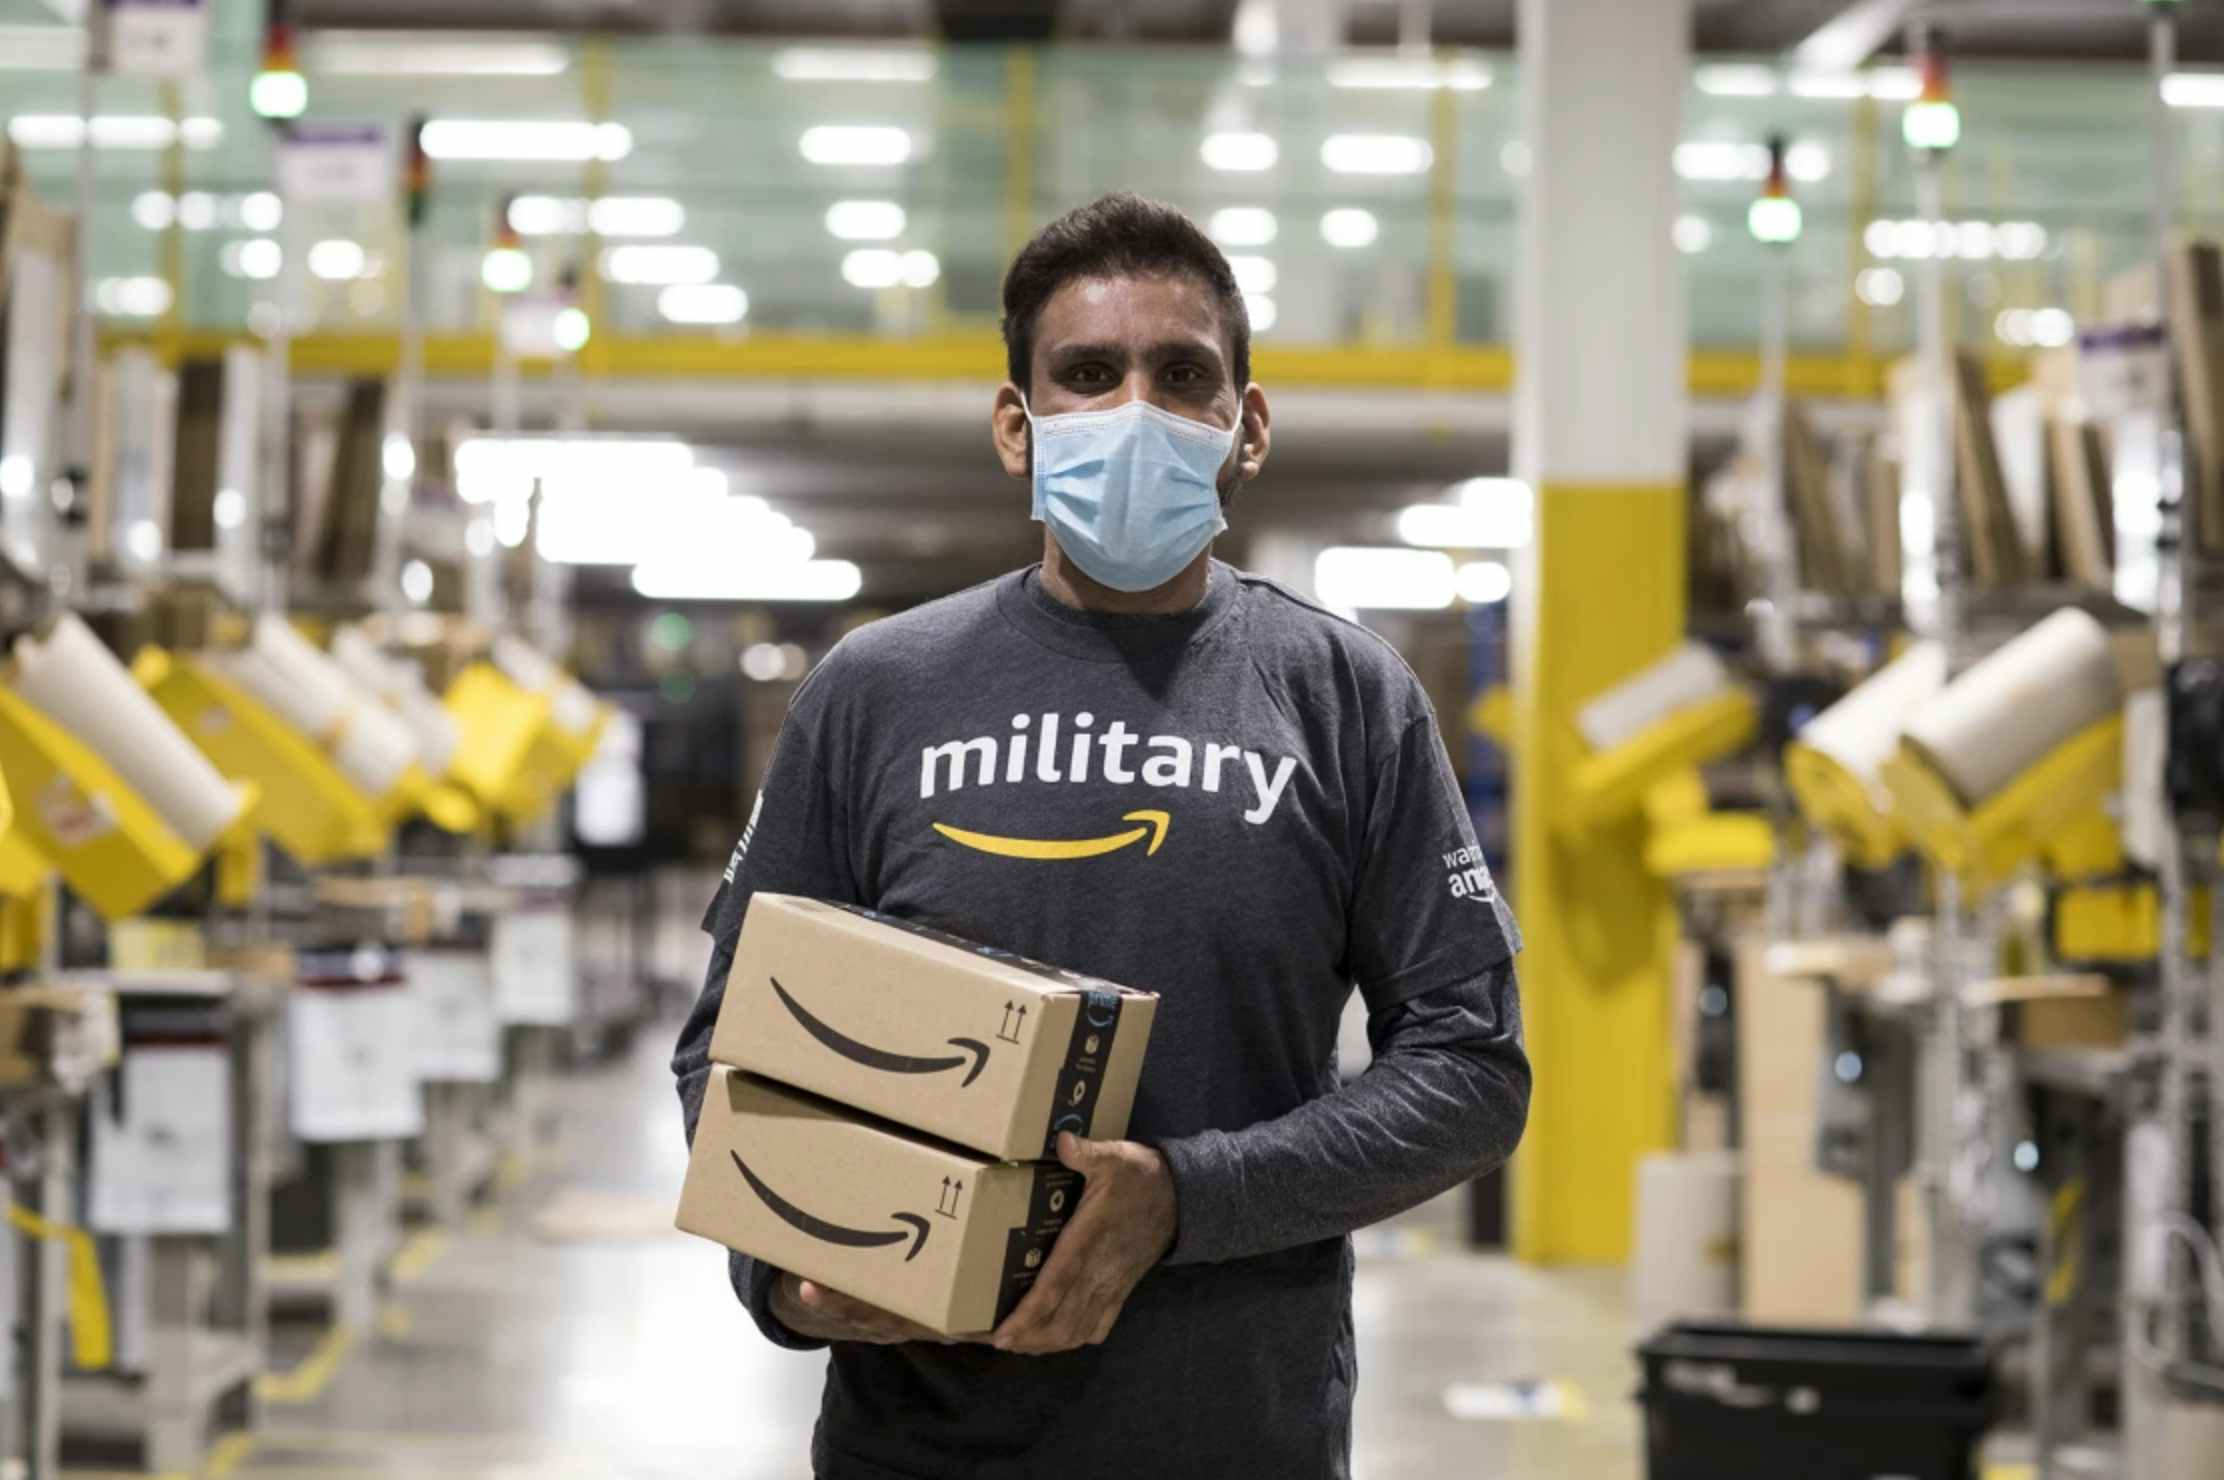 An amazon employee in a military shirt.